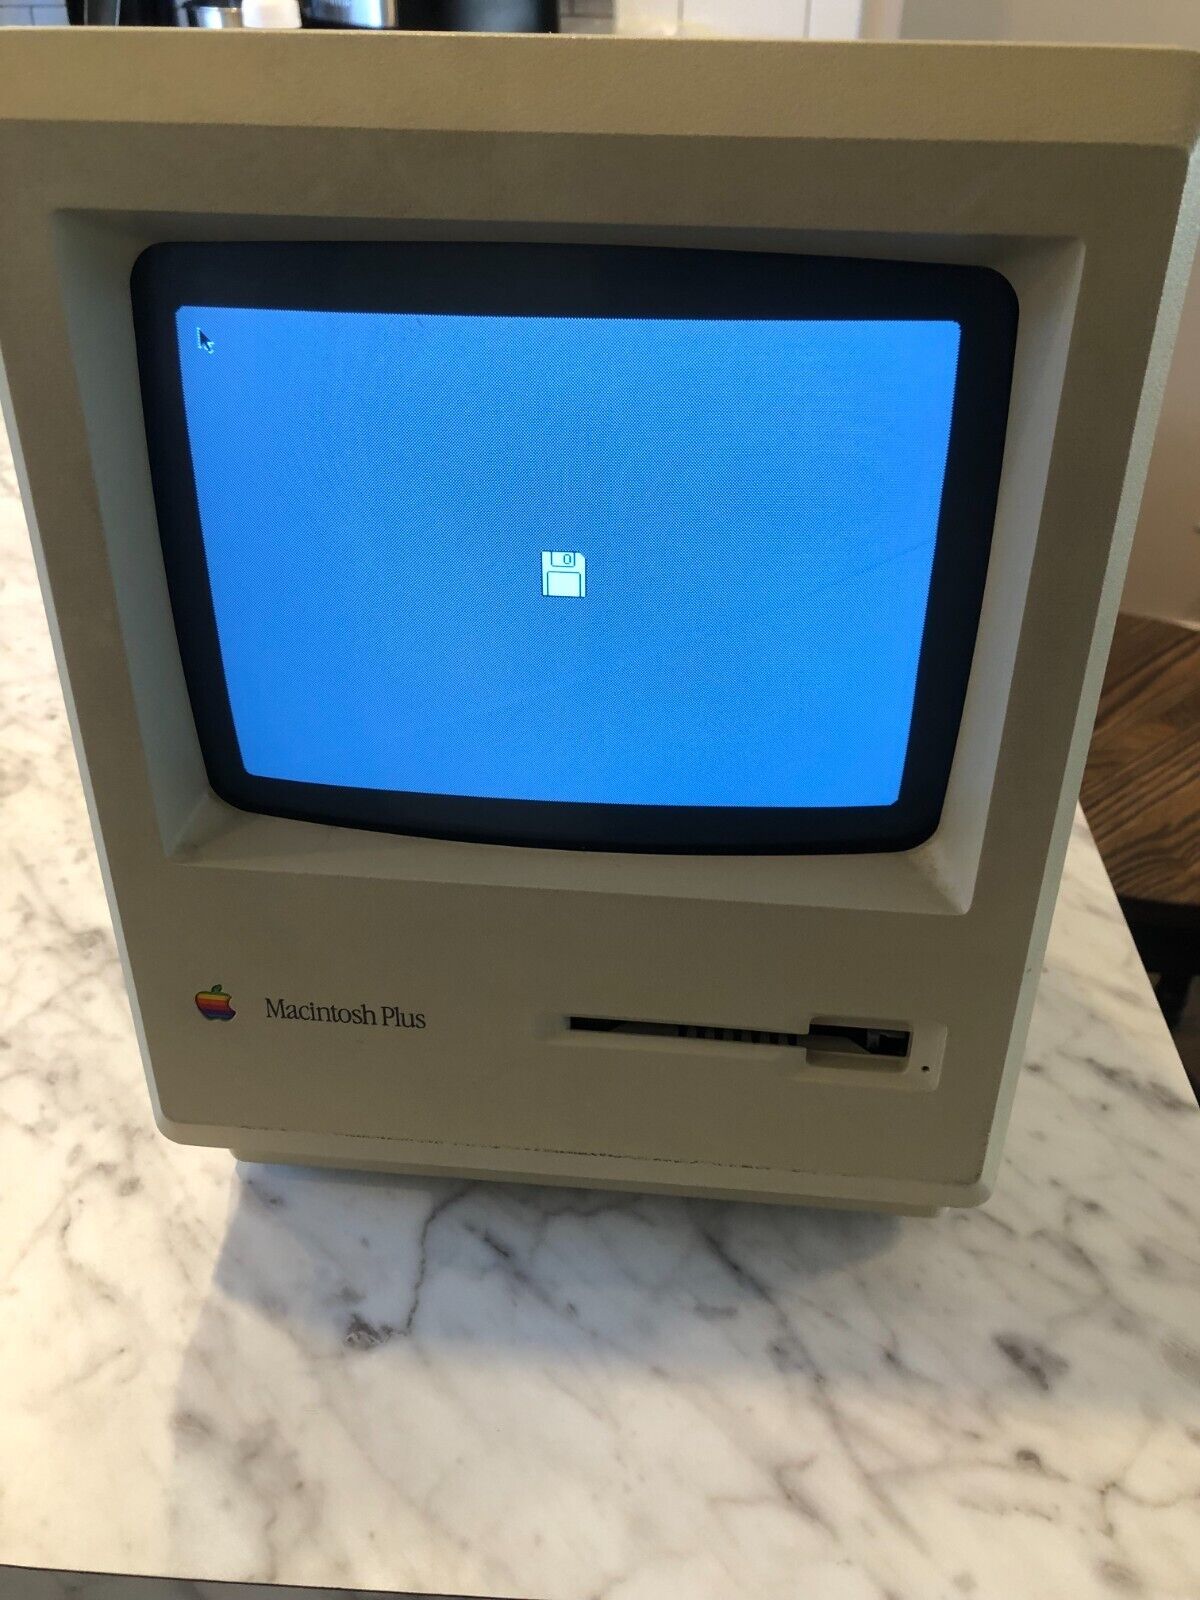 APPLE MACINTOSH PLUS 1 MB M0001A Vintage Mac Computer FDD NOT Working